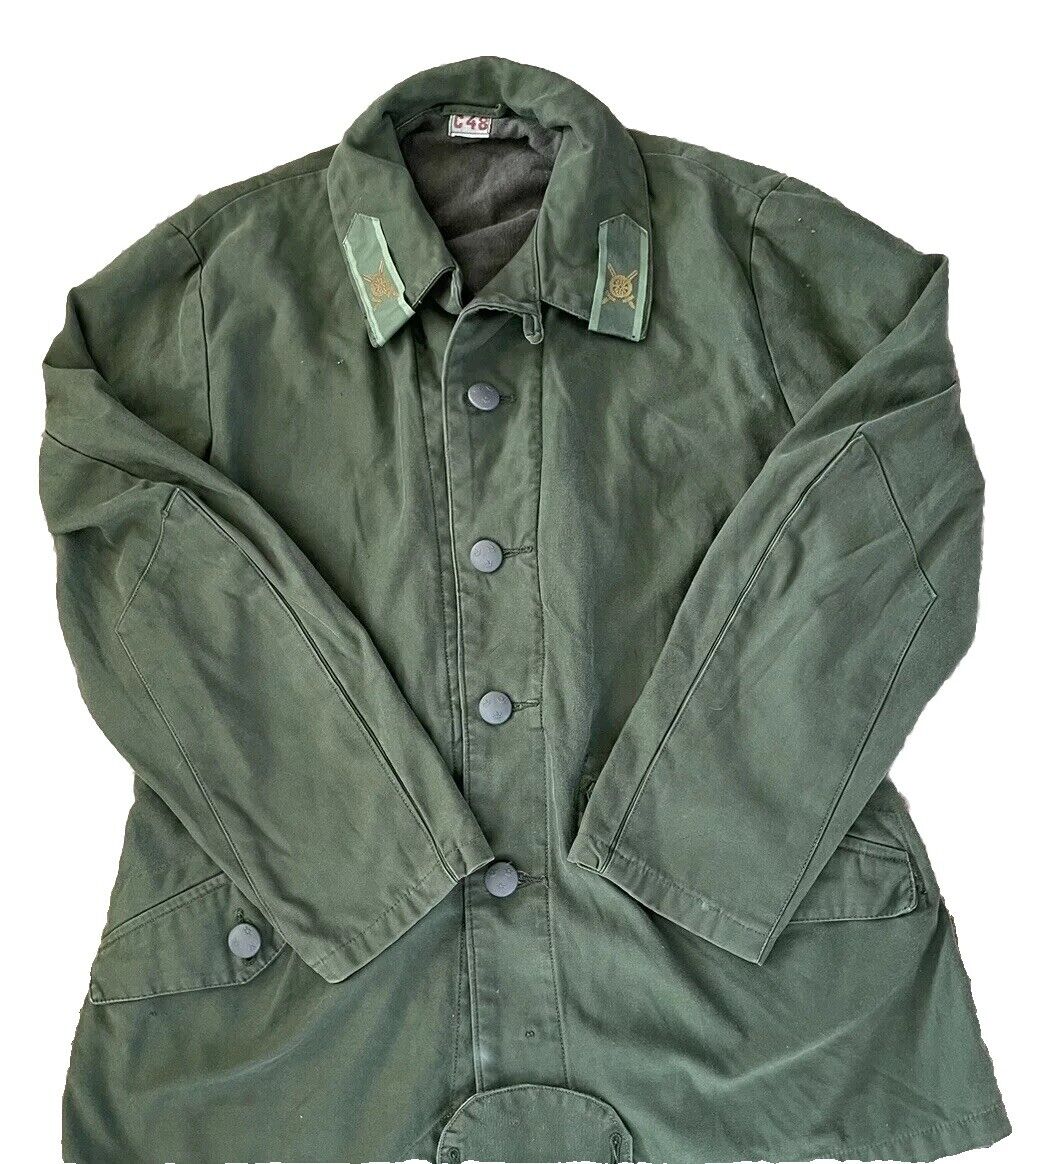 Genuine Vintage Swedish Army Olive Green Work Chore Jacket Military Coat C48